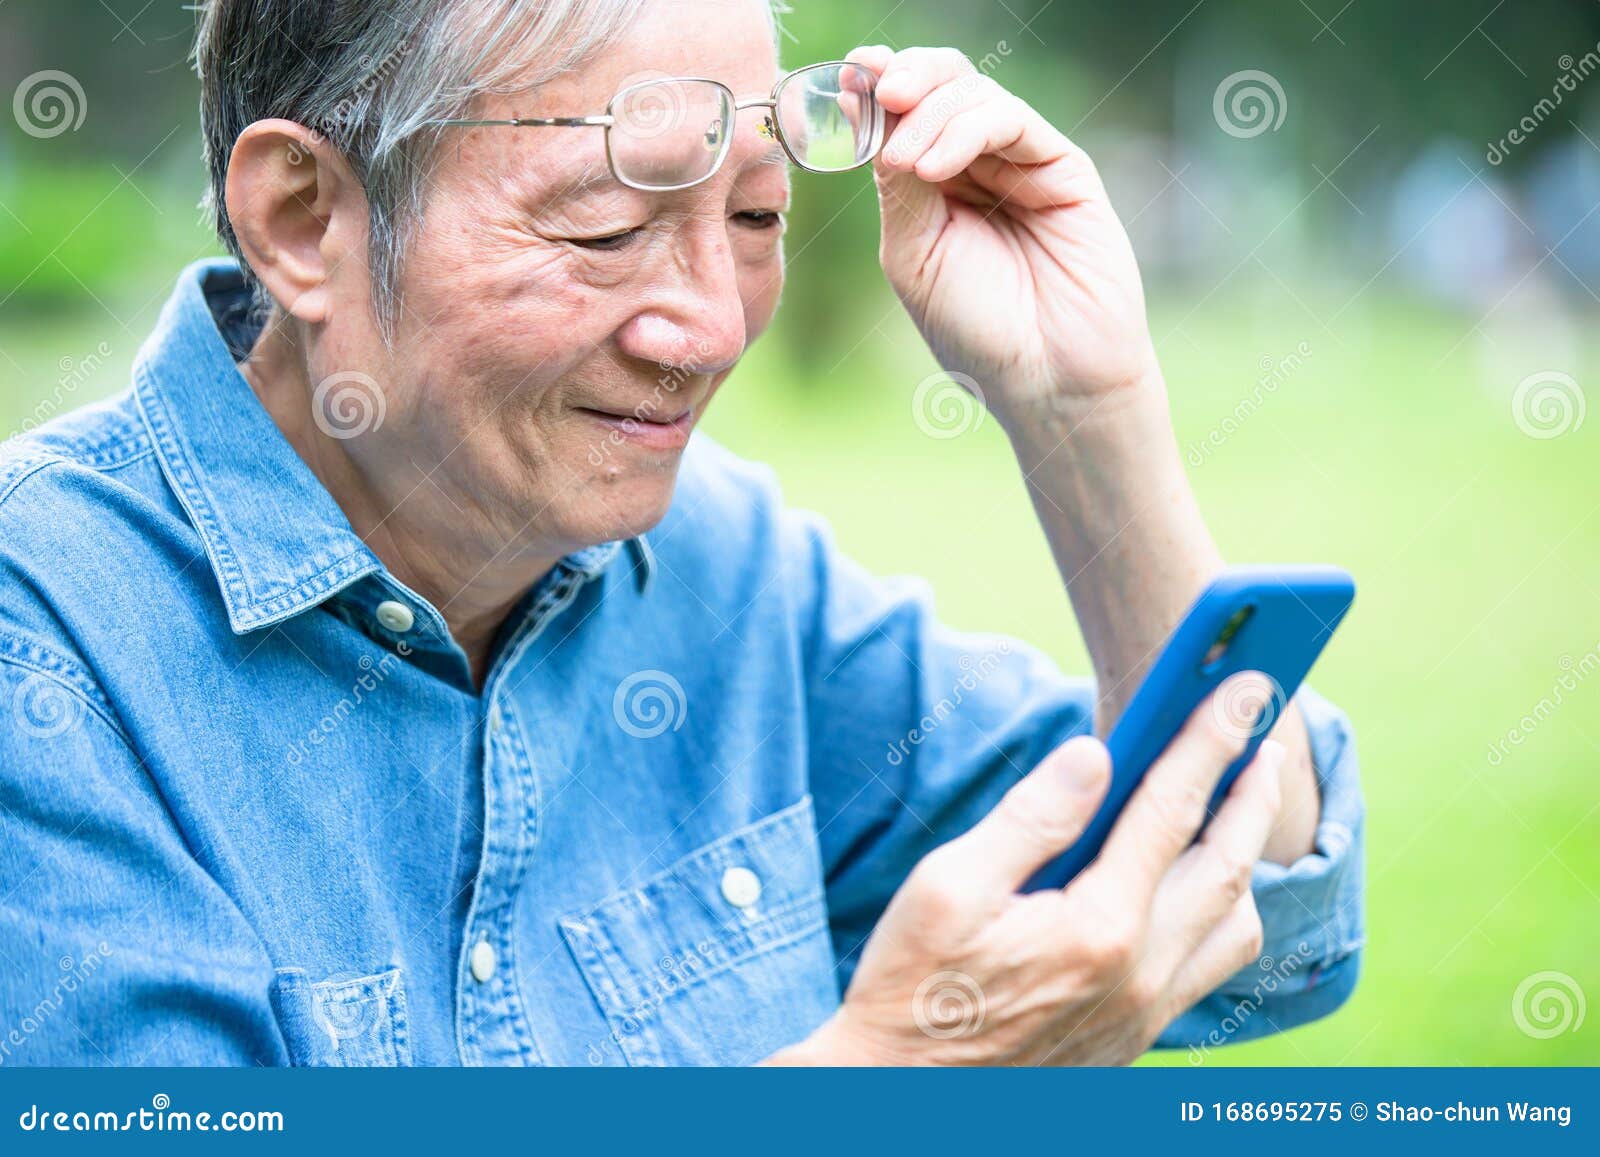 asian elder man has presbyopia